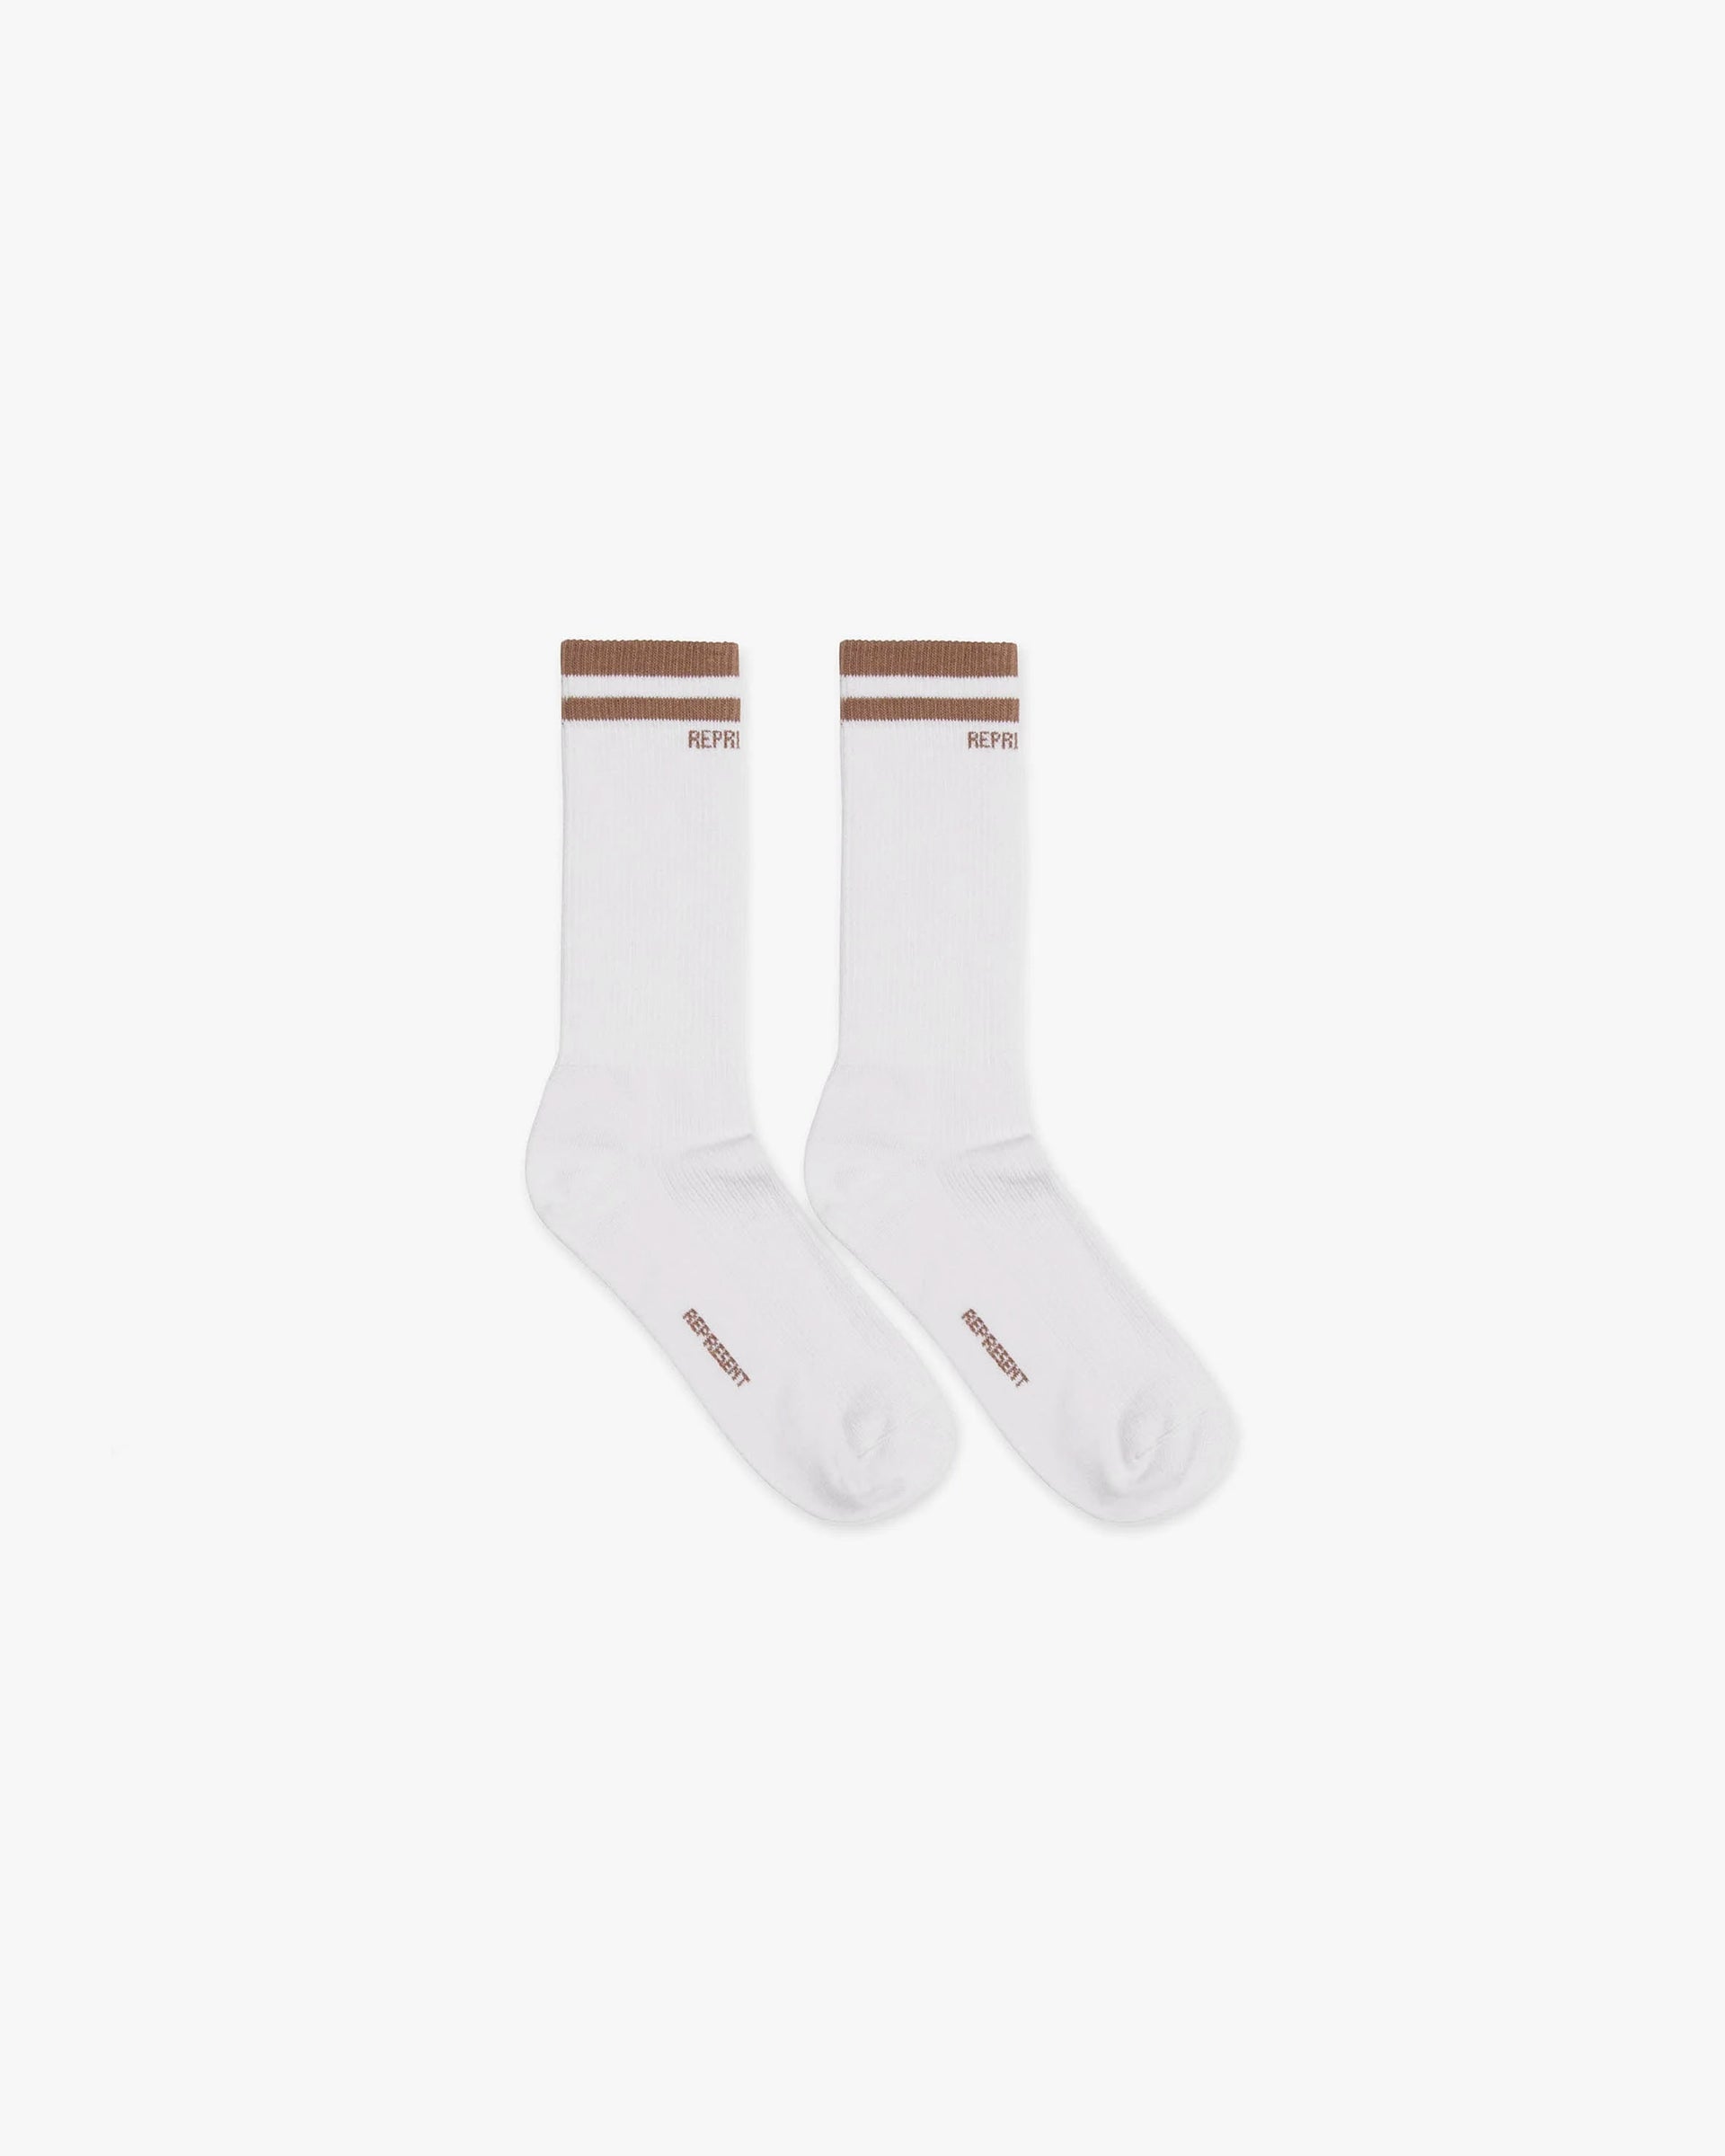 Represent College Socks | Mushroom Accessories SS23 | Represent Clo